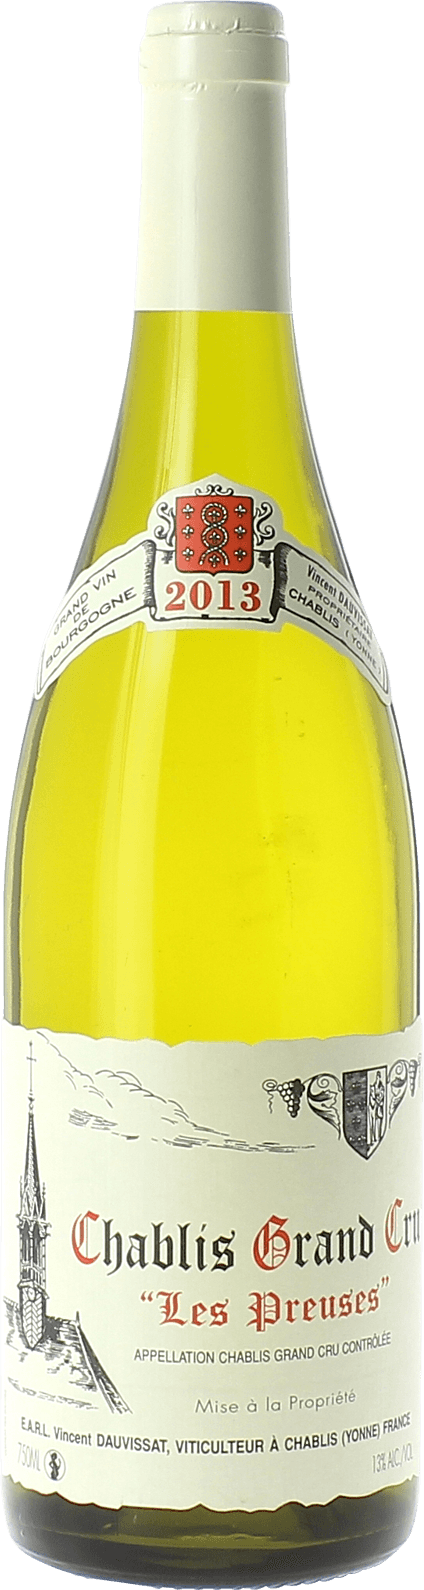 Chablis grand cru les preuses 2015 Domaine DAUVISSAT, Bourgogne blanc